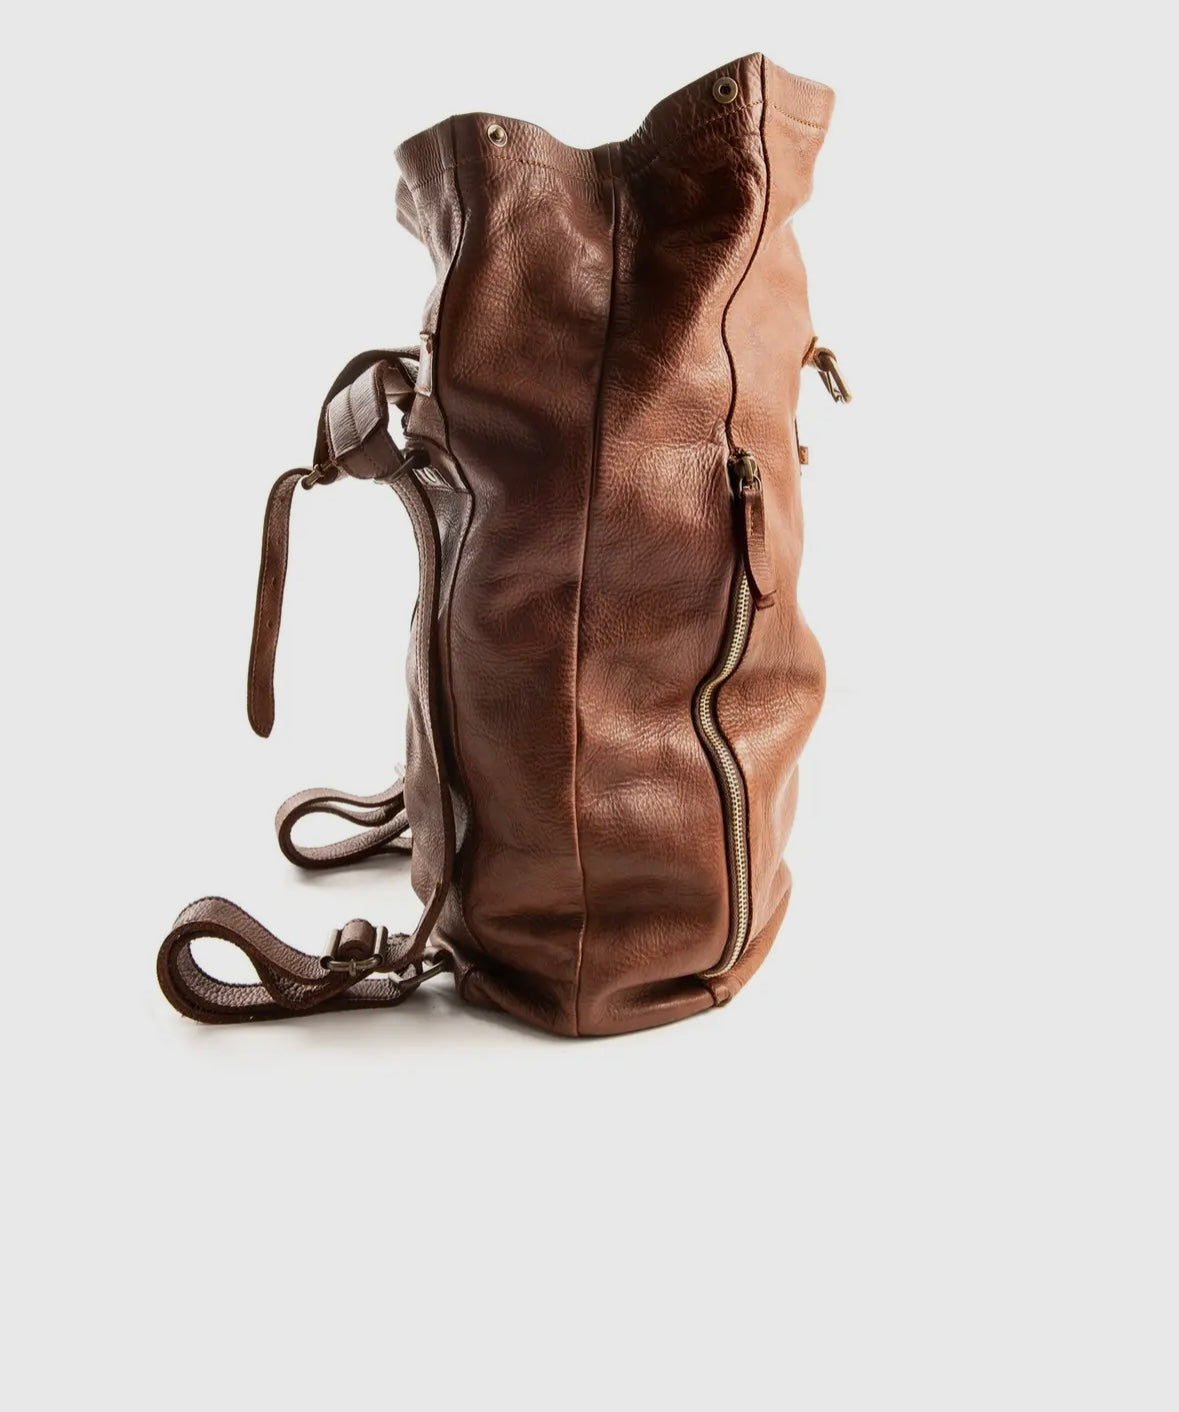 Harolds rollover backpack